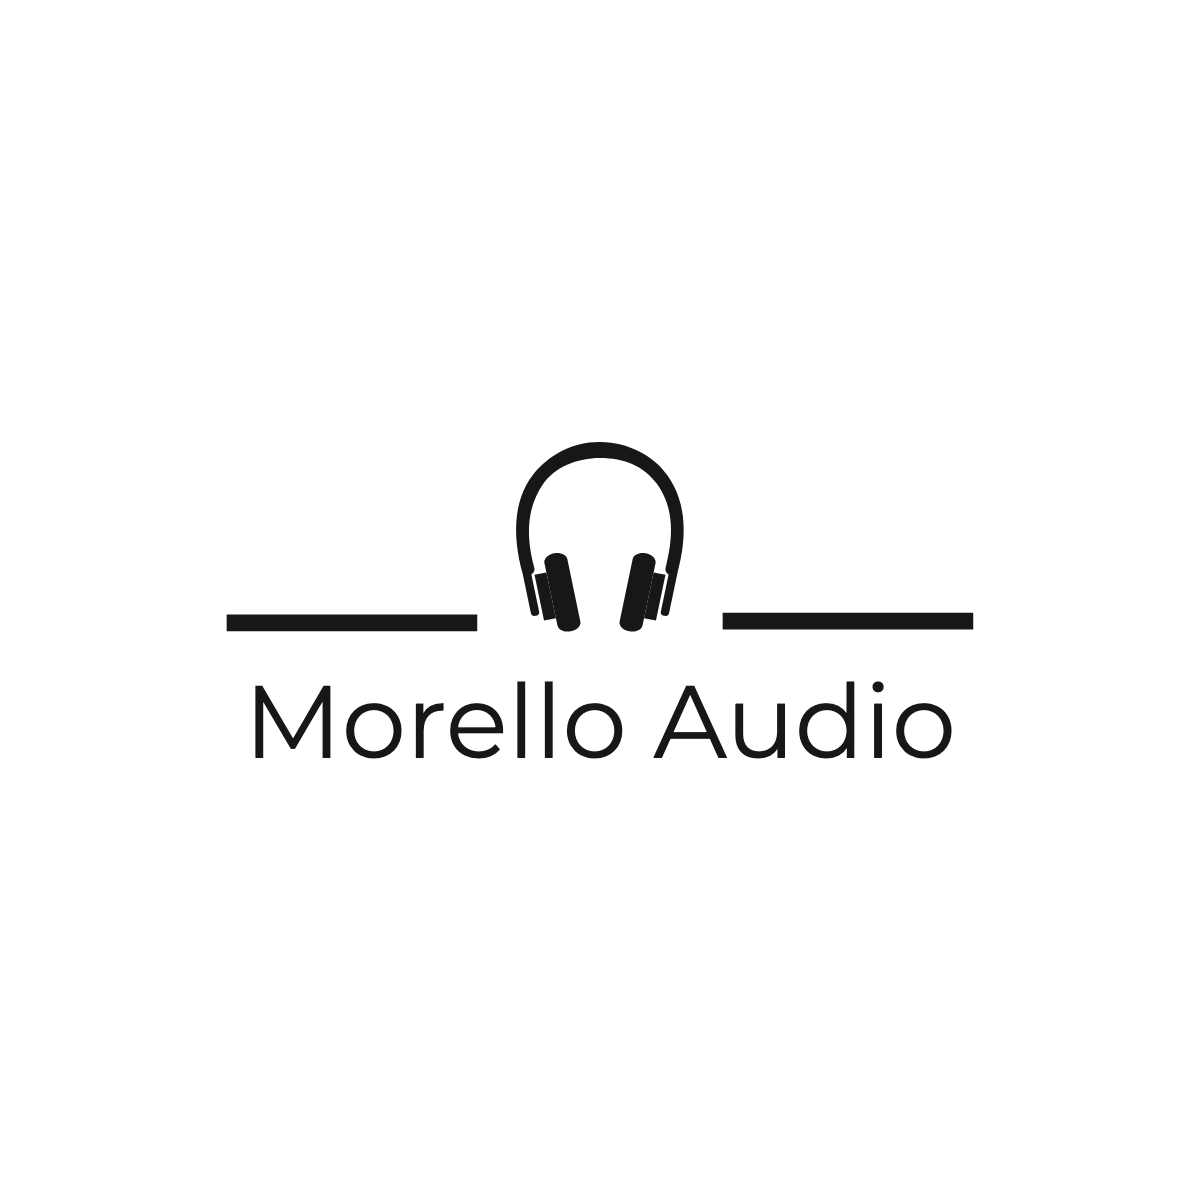 Morello Audio